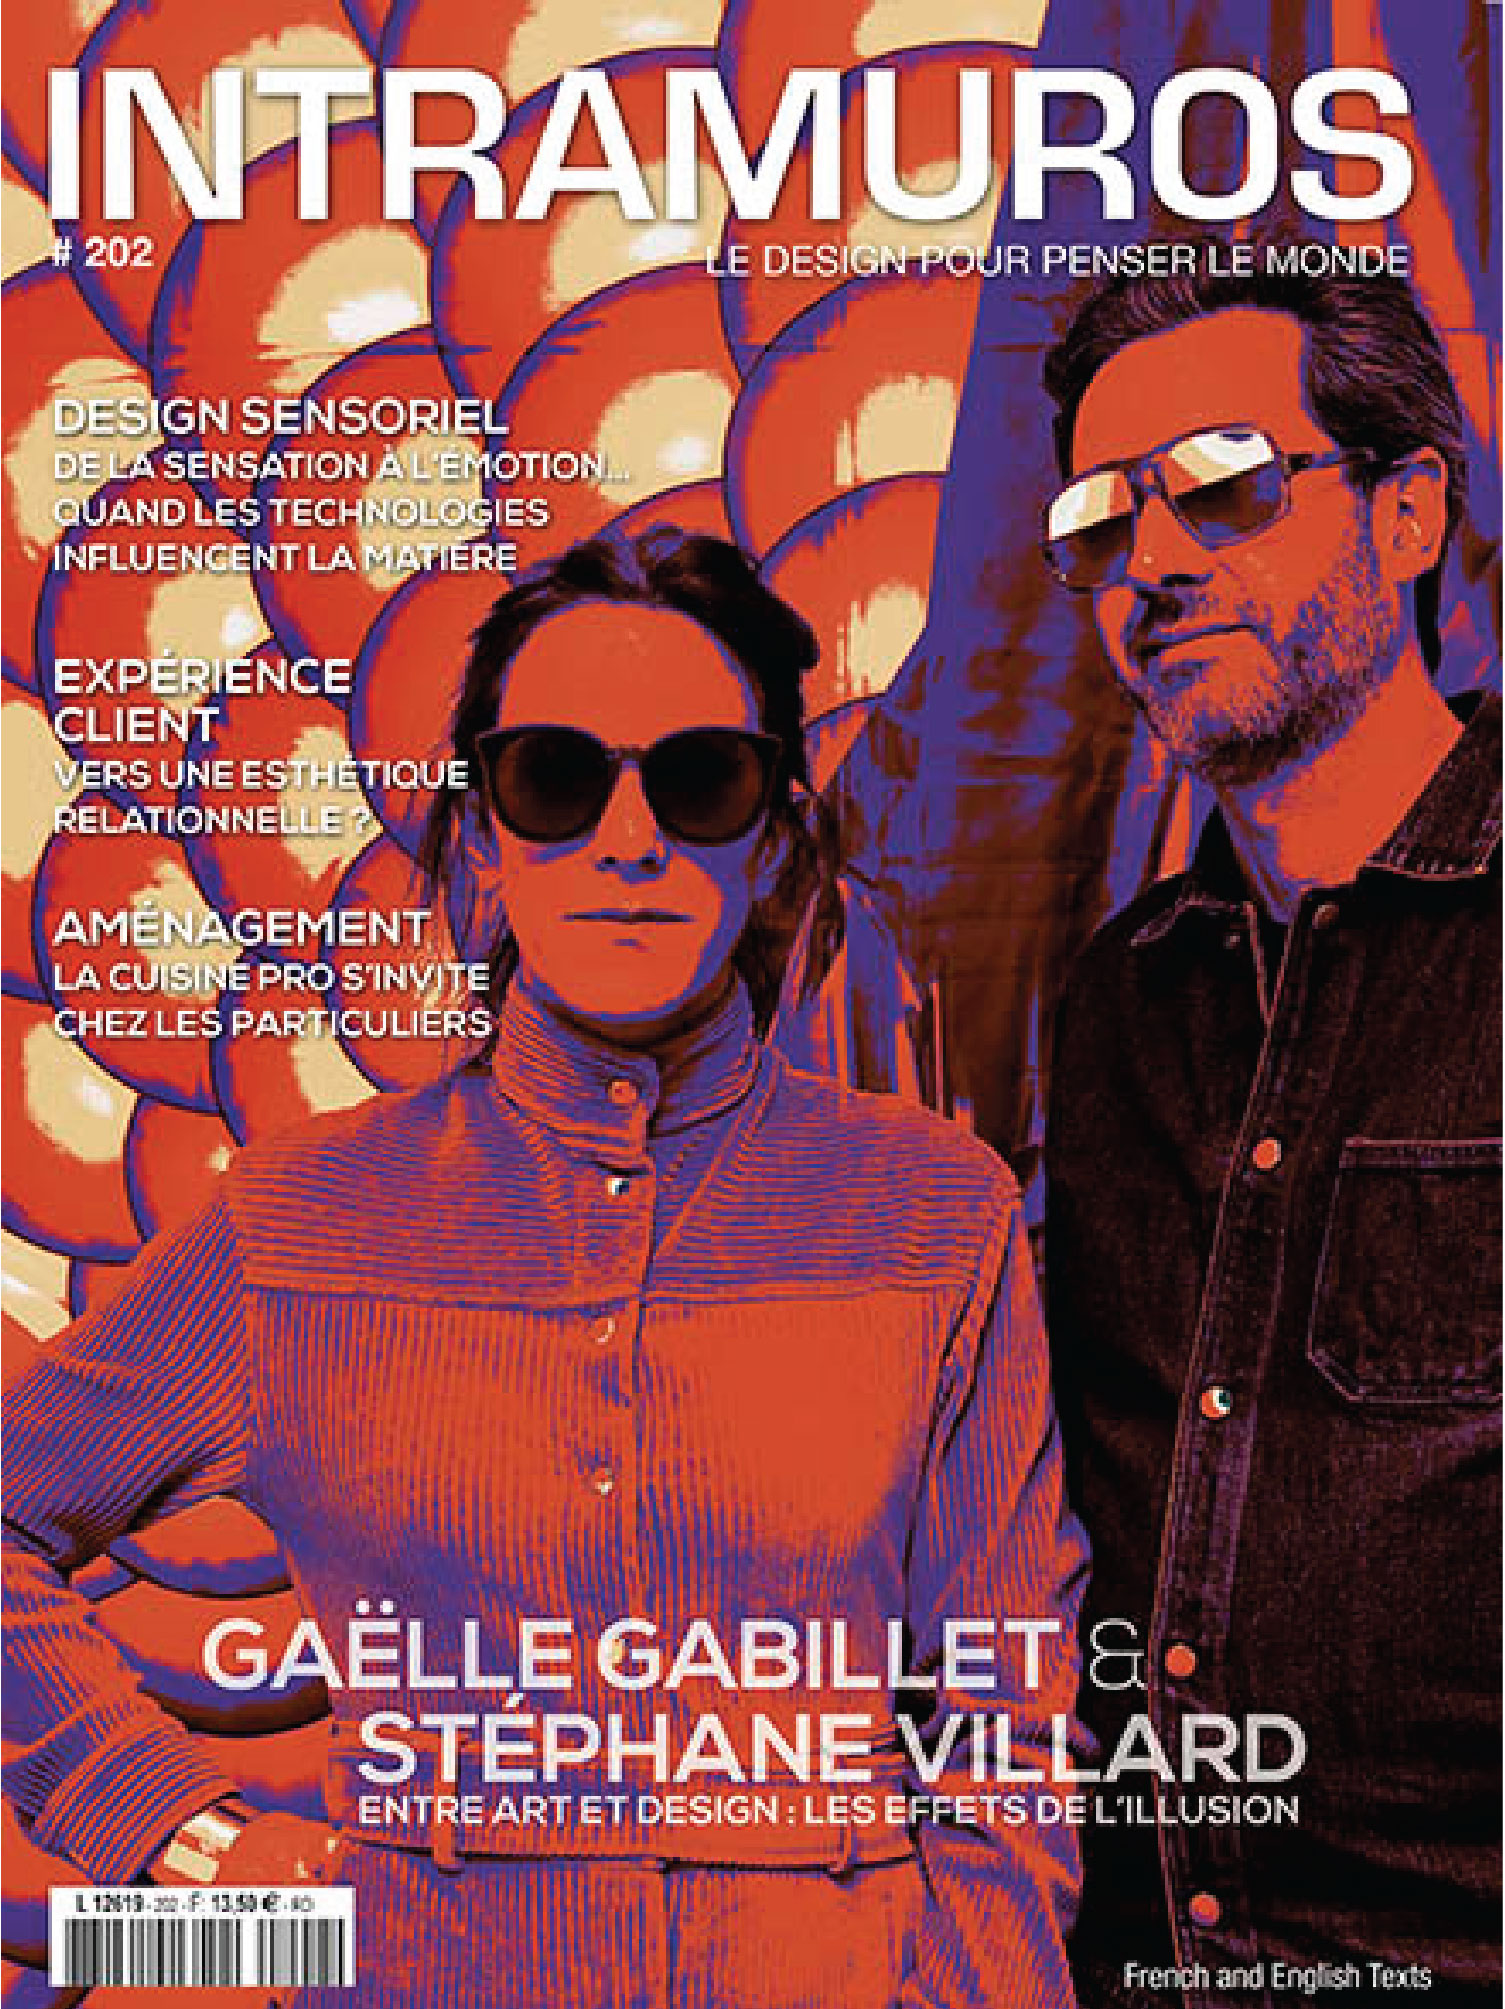 cover of the magazine intramuros december 2019